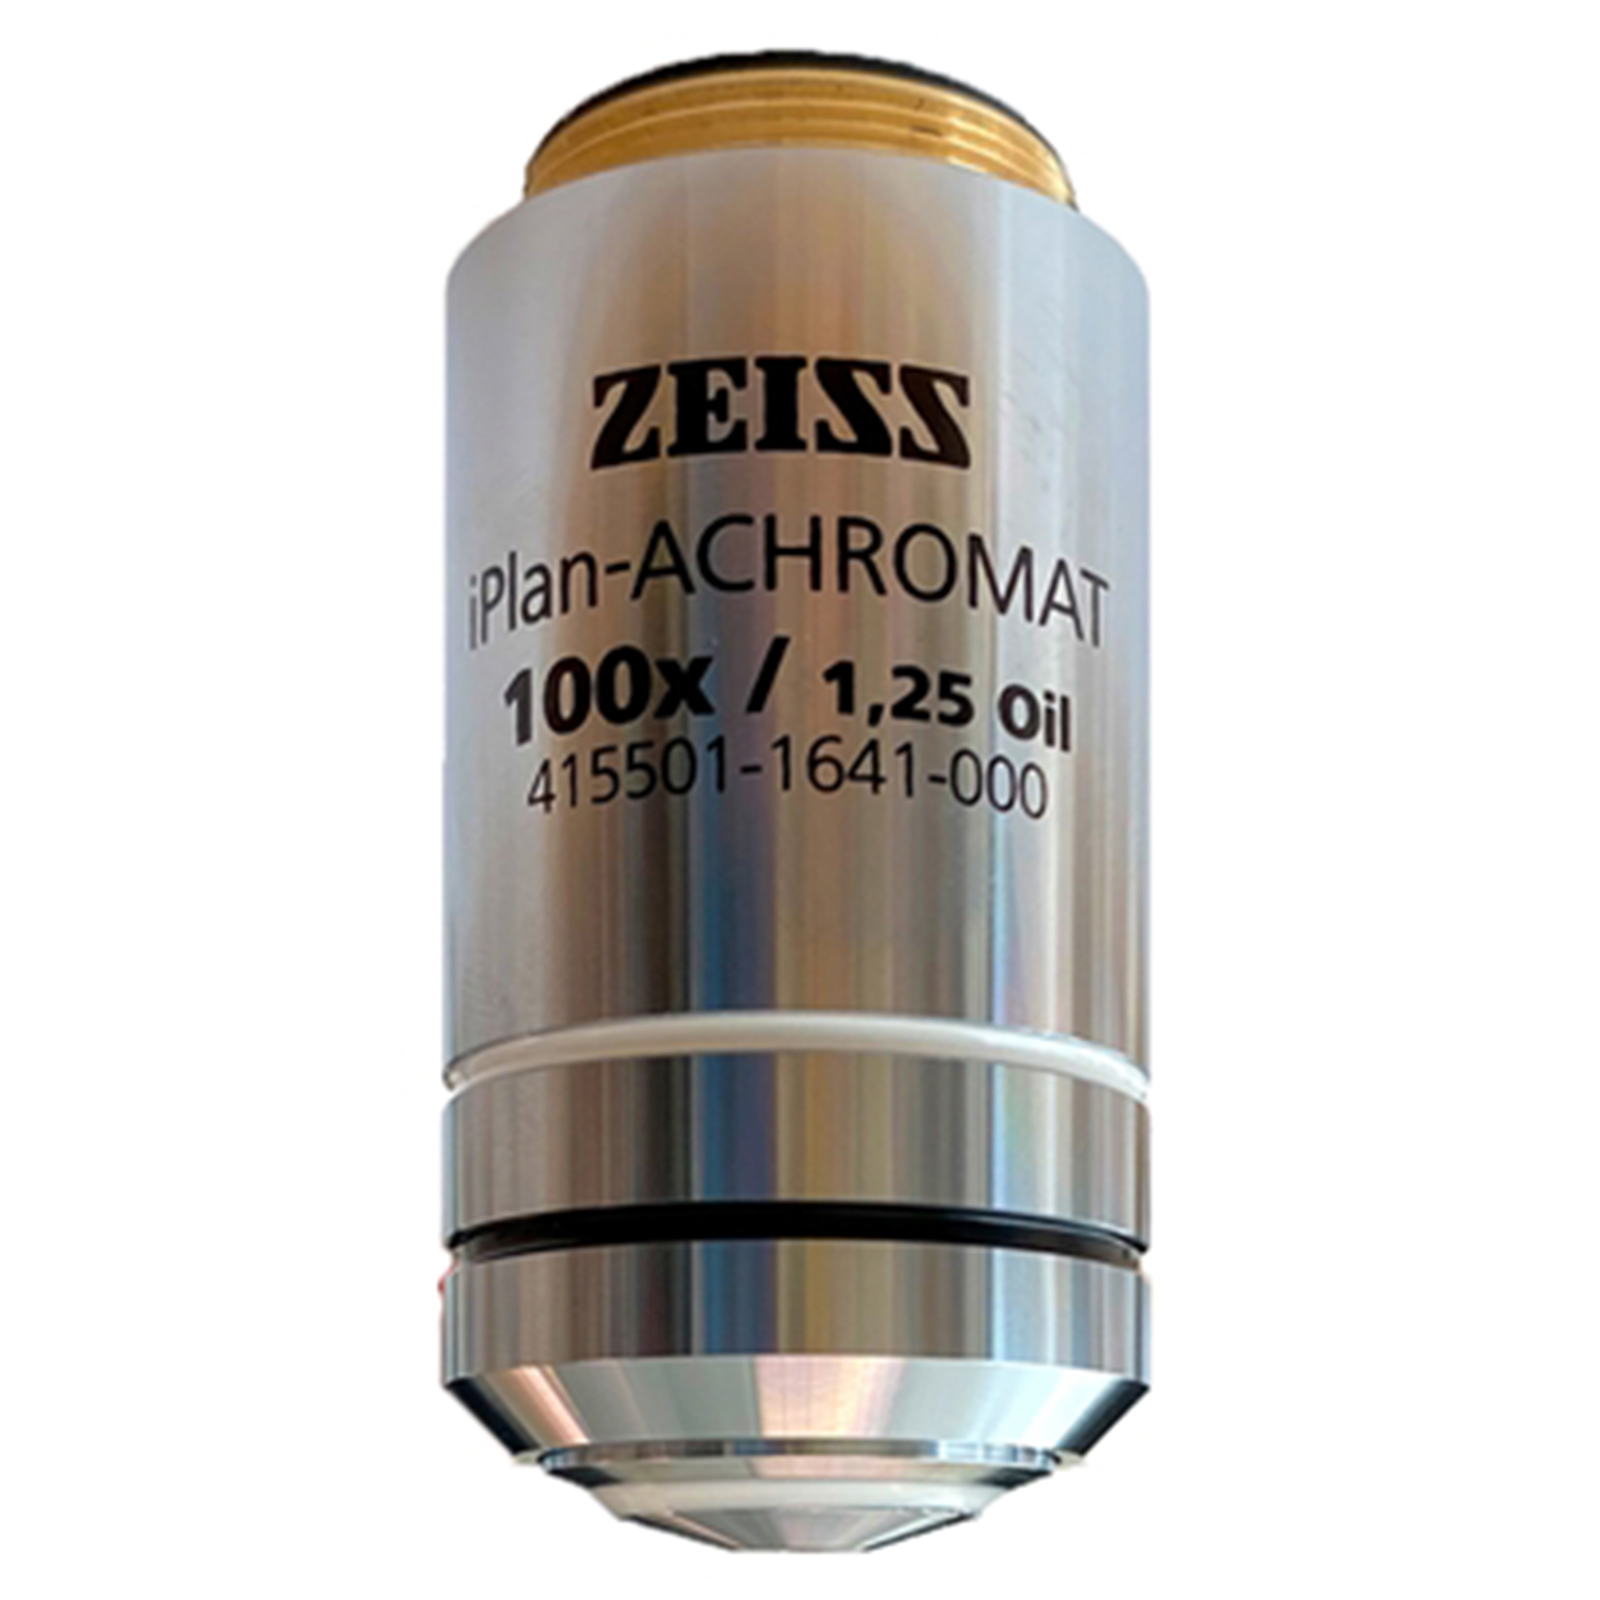 Image of Zeiss Primostar 3 Achromat 100x Objective